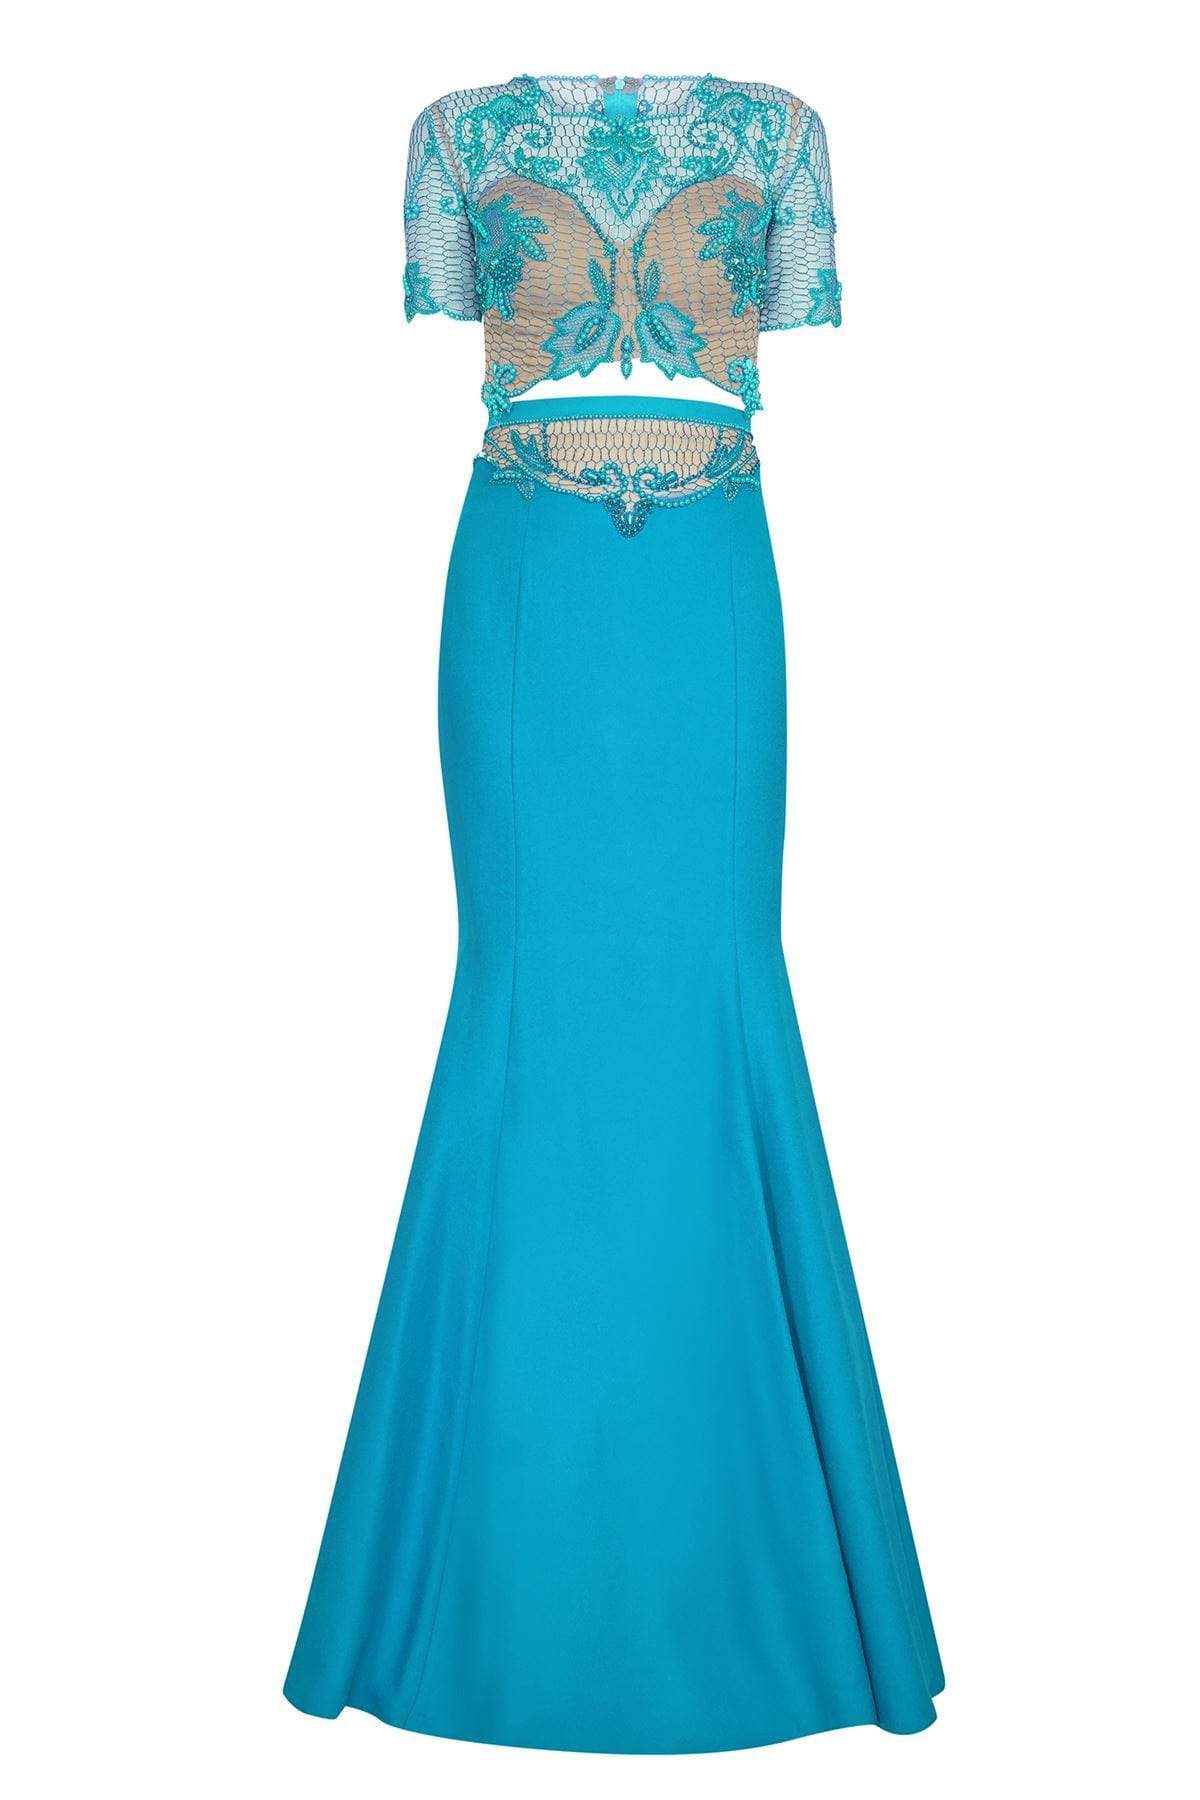 Tarik Ediz - Two Piece Beaded Mermaid Dress 50108 Special Occasion Dress 0 / Oil